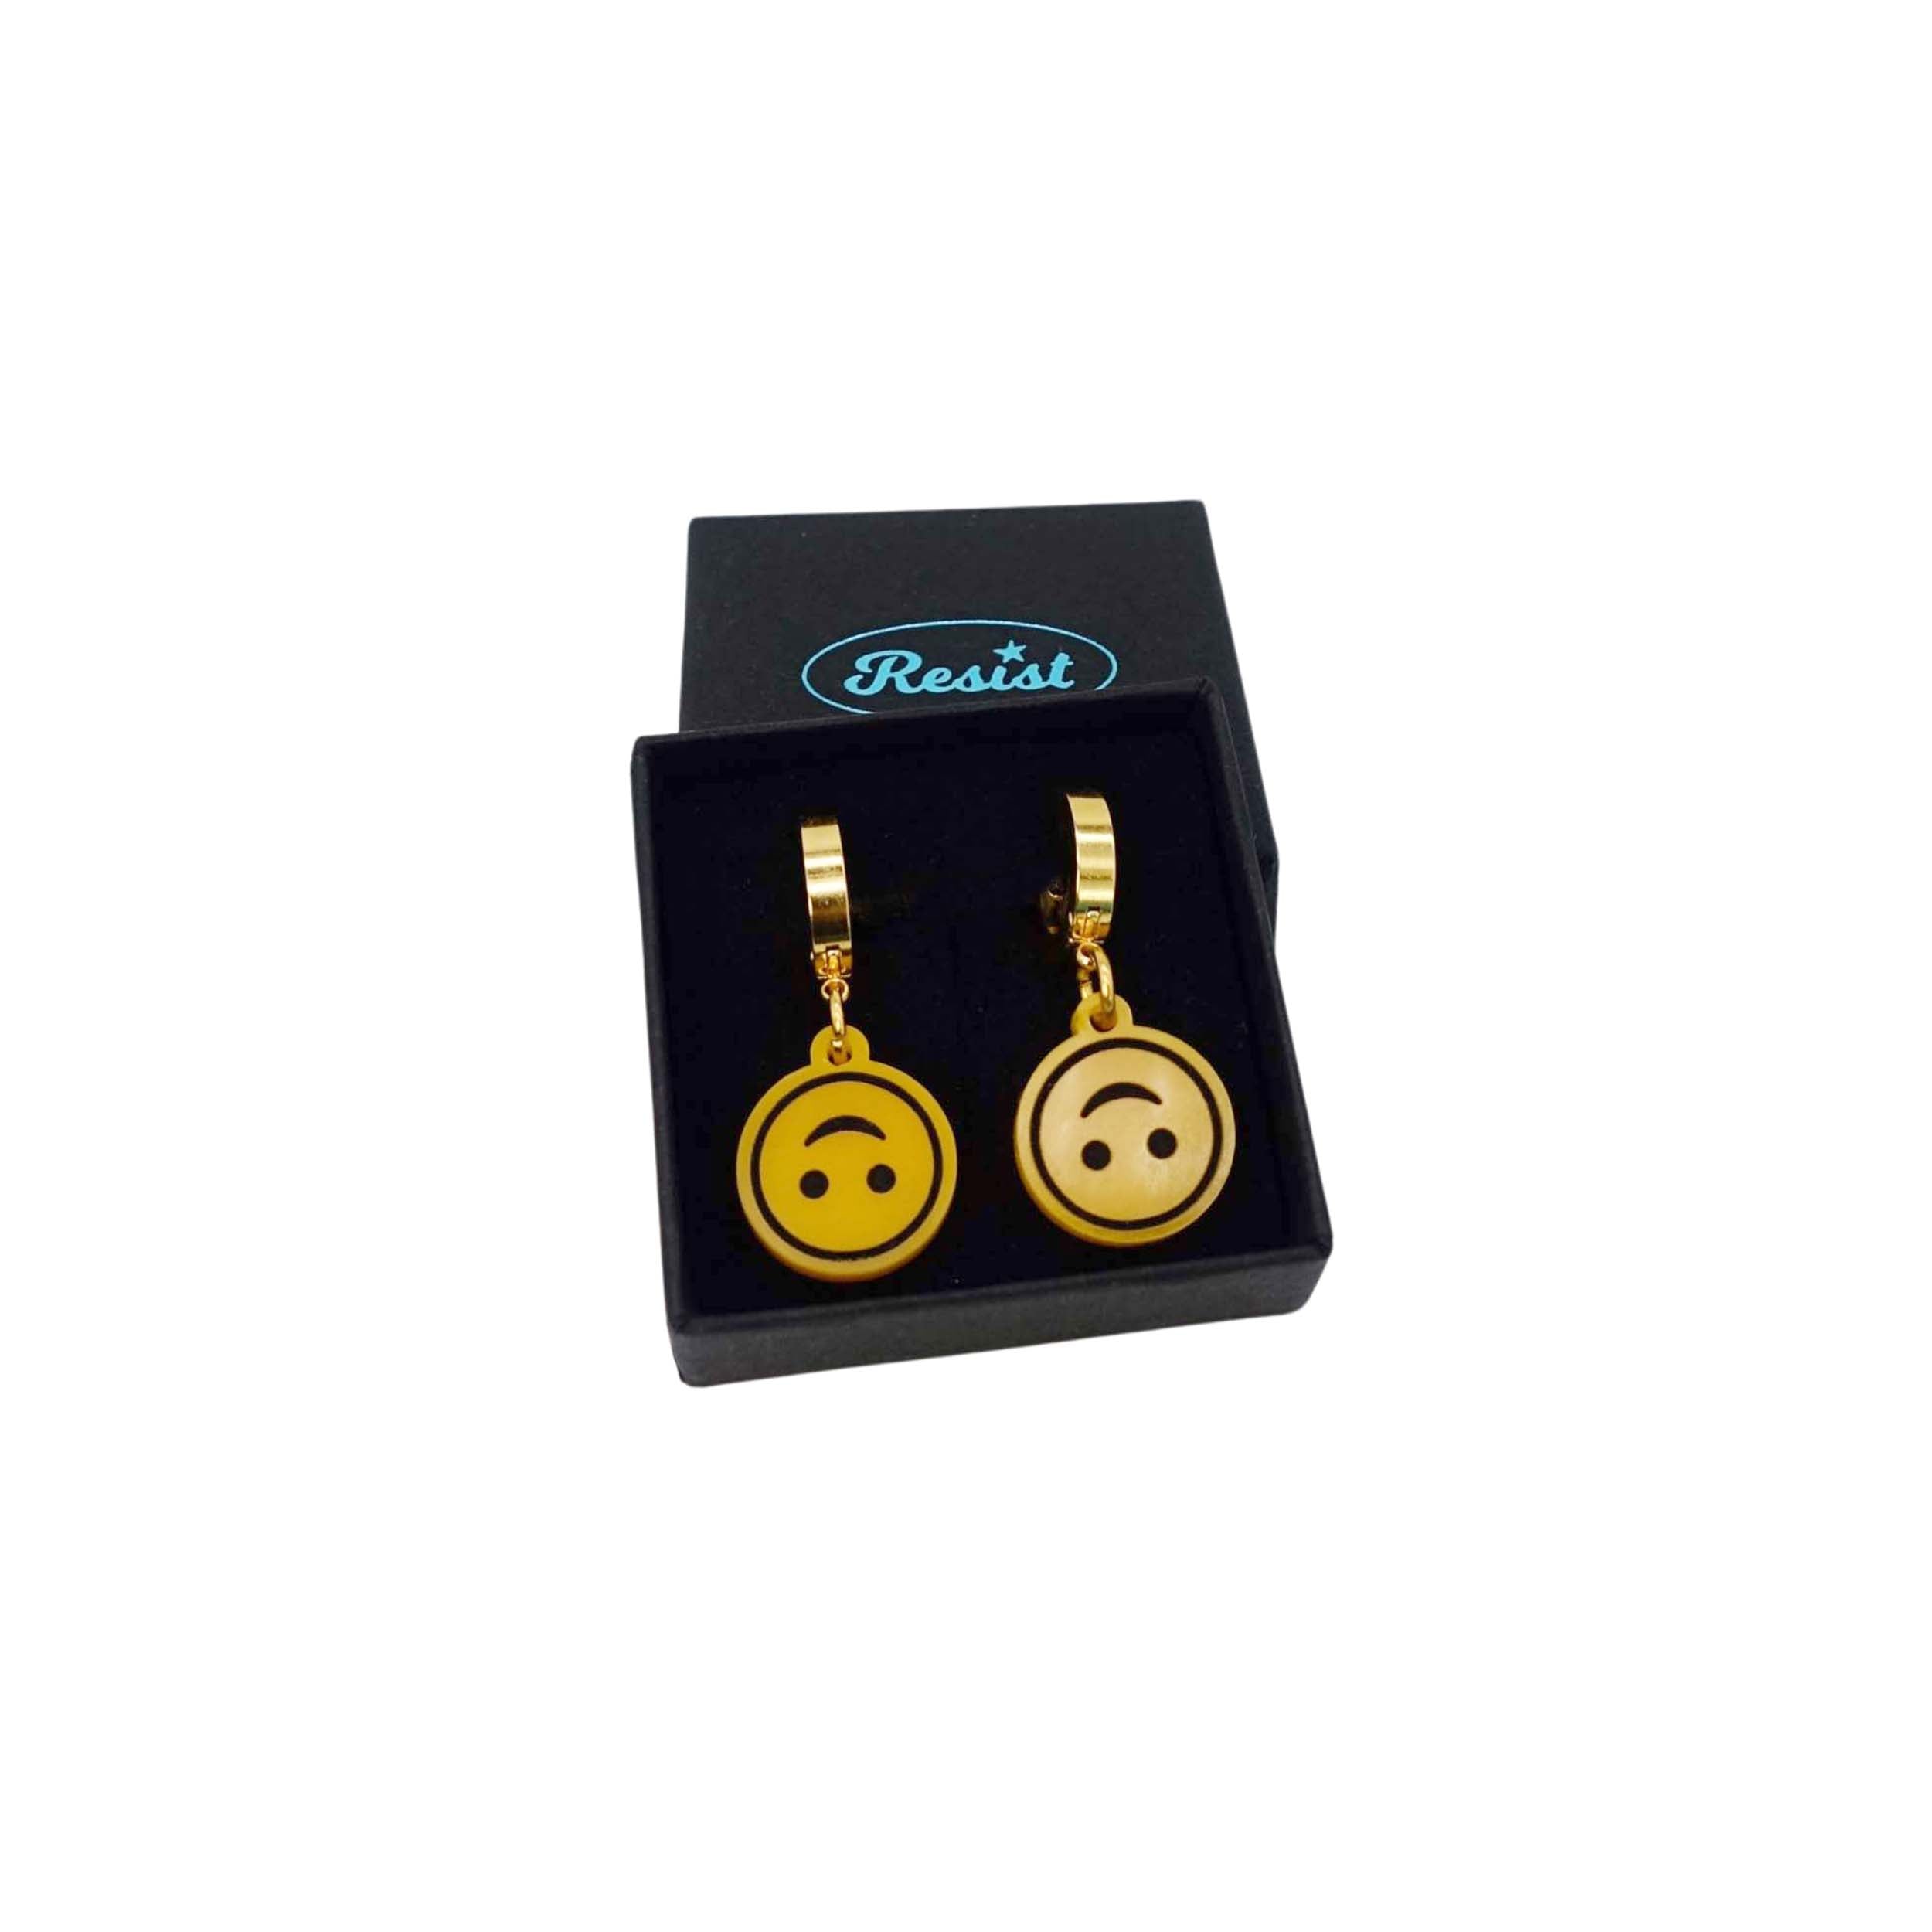 Upside-down smiley face emoji earrings on gold huggie hoops shown in a Wear and Resist gift box. 